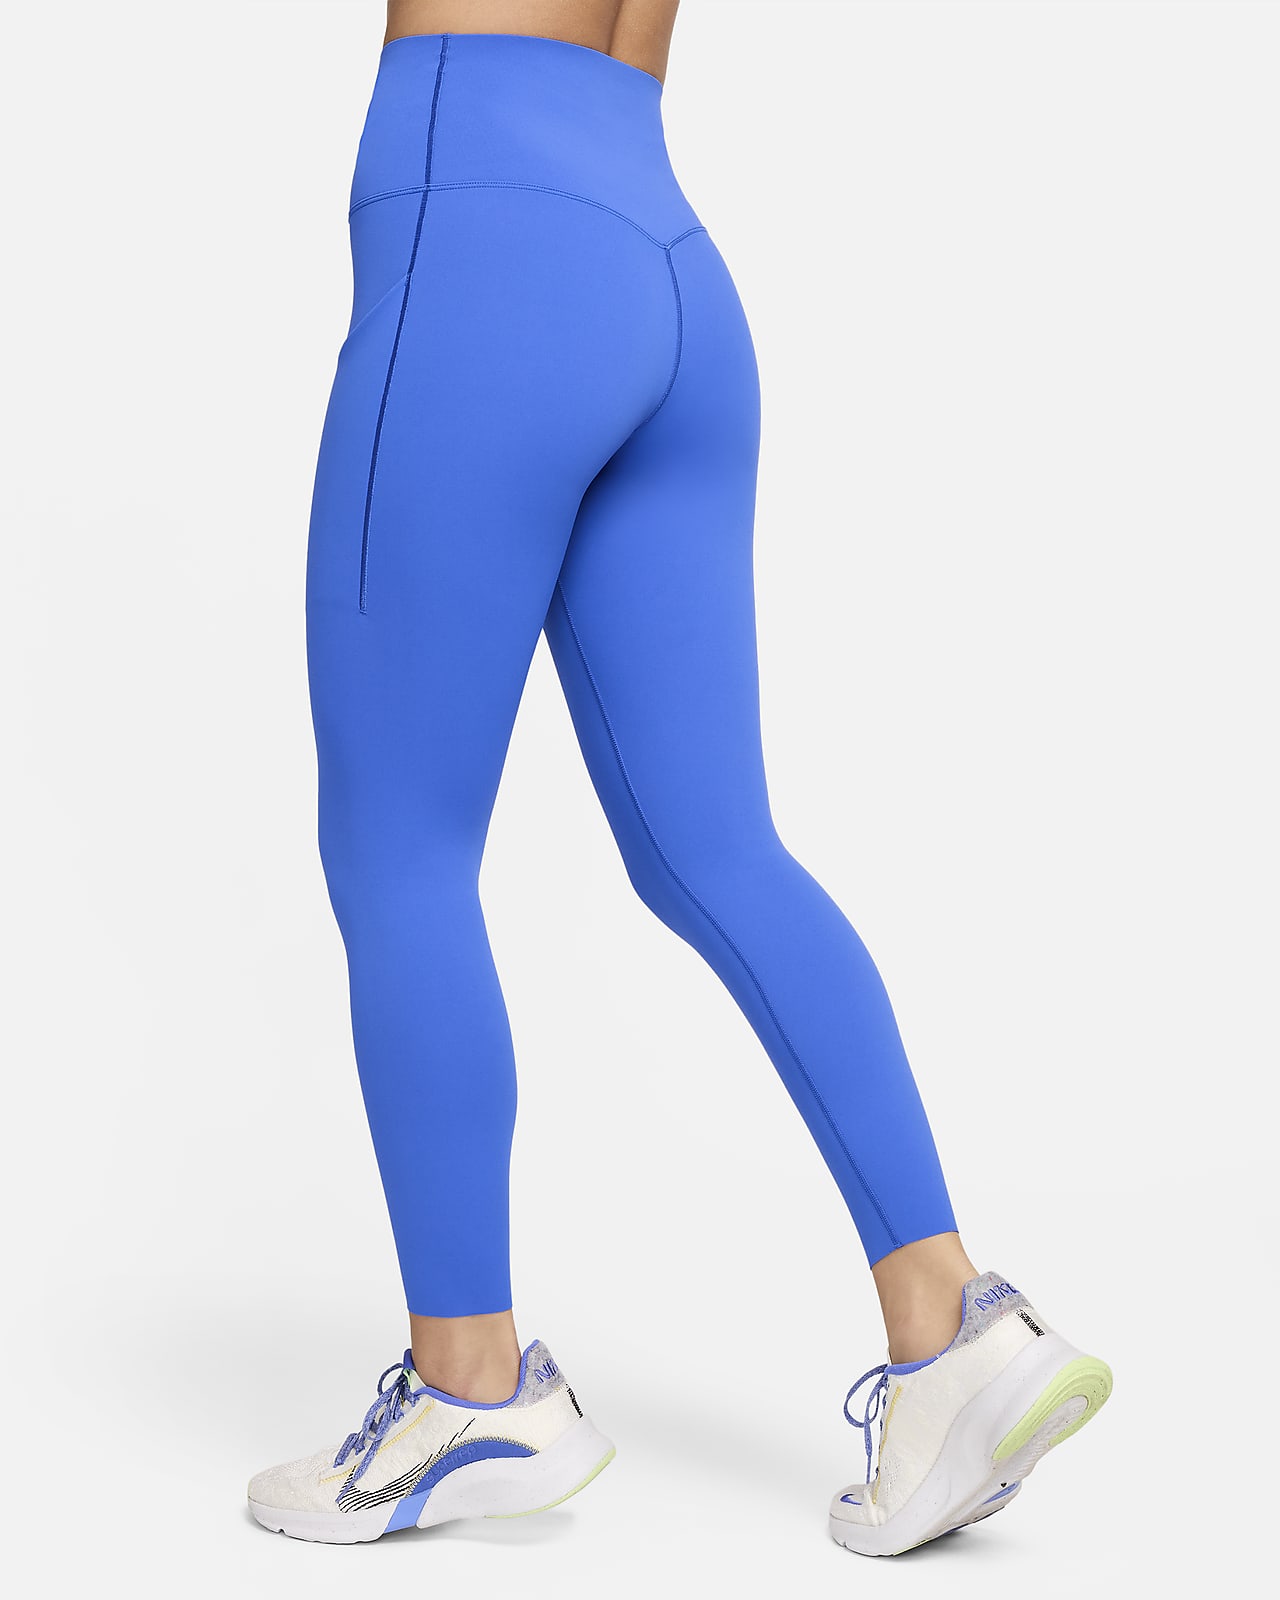 Nike Women's Crochet Trimmed 7/8 High Waist Yoga Leggings, Blue, XL